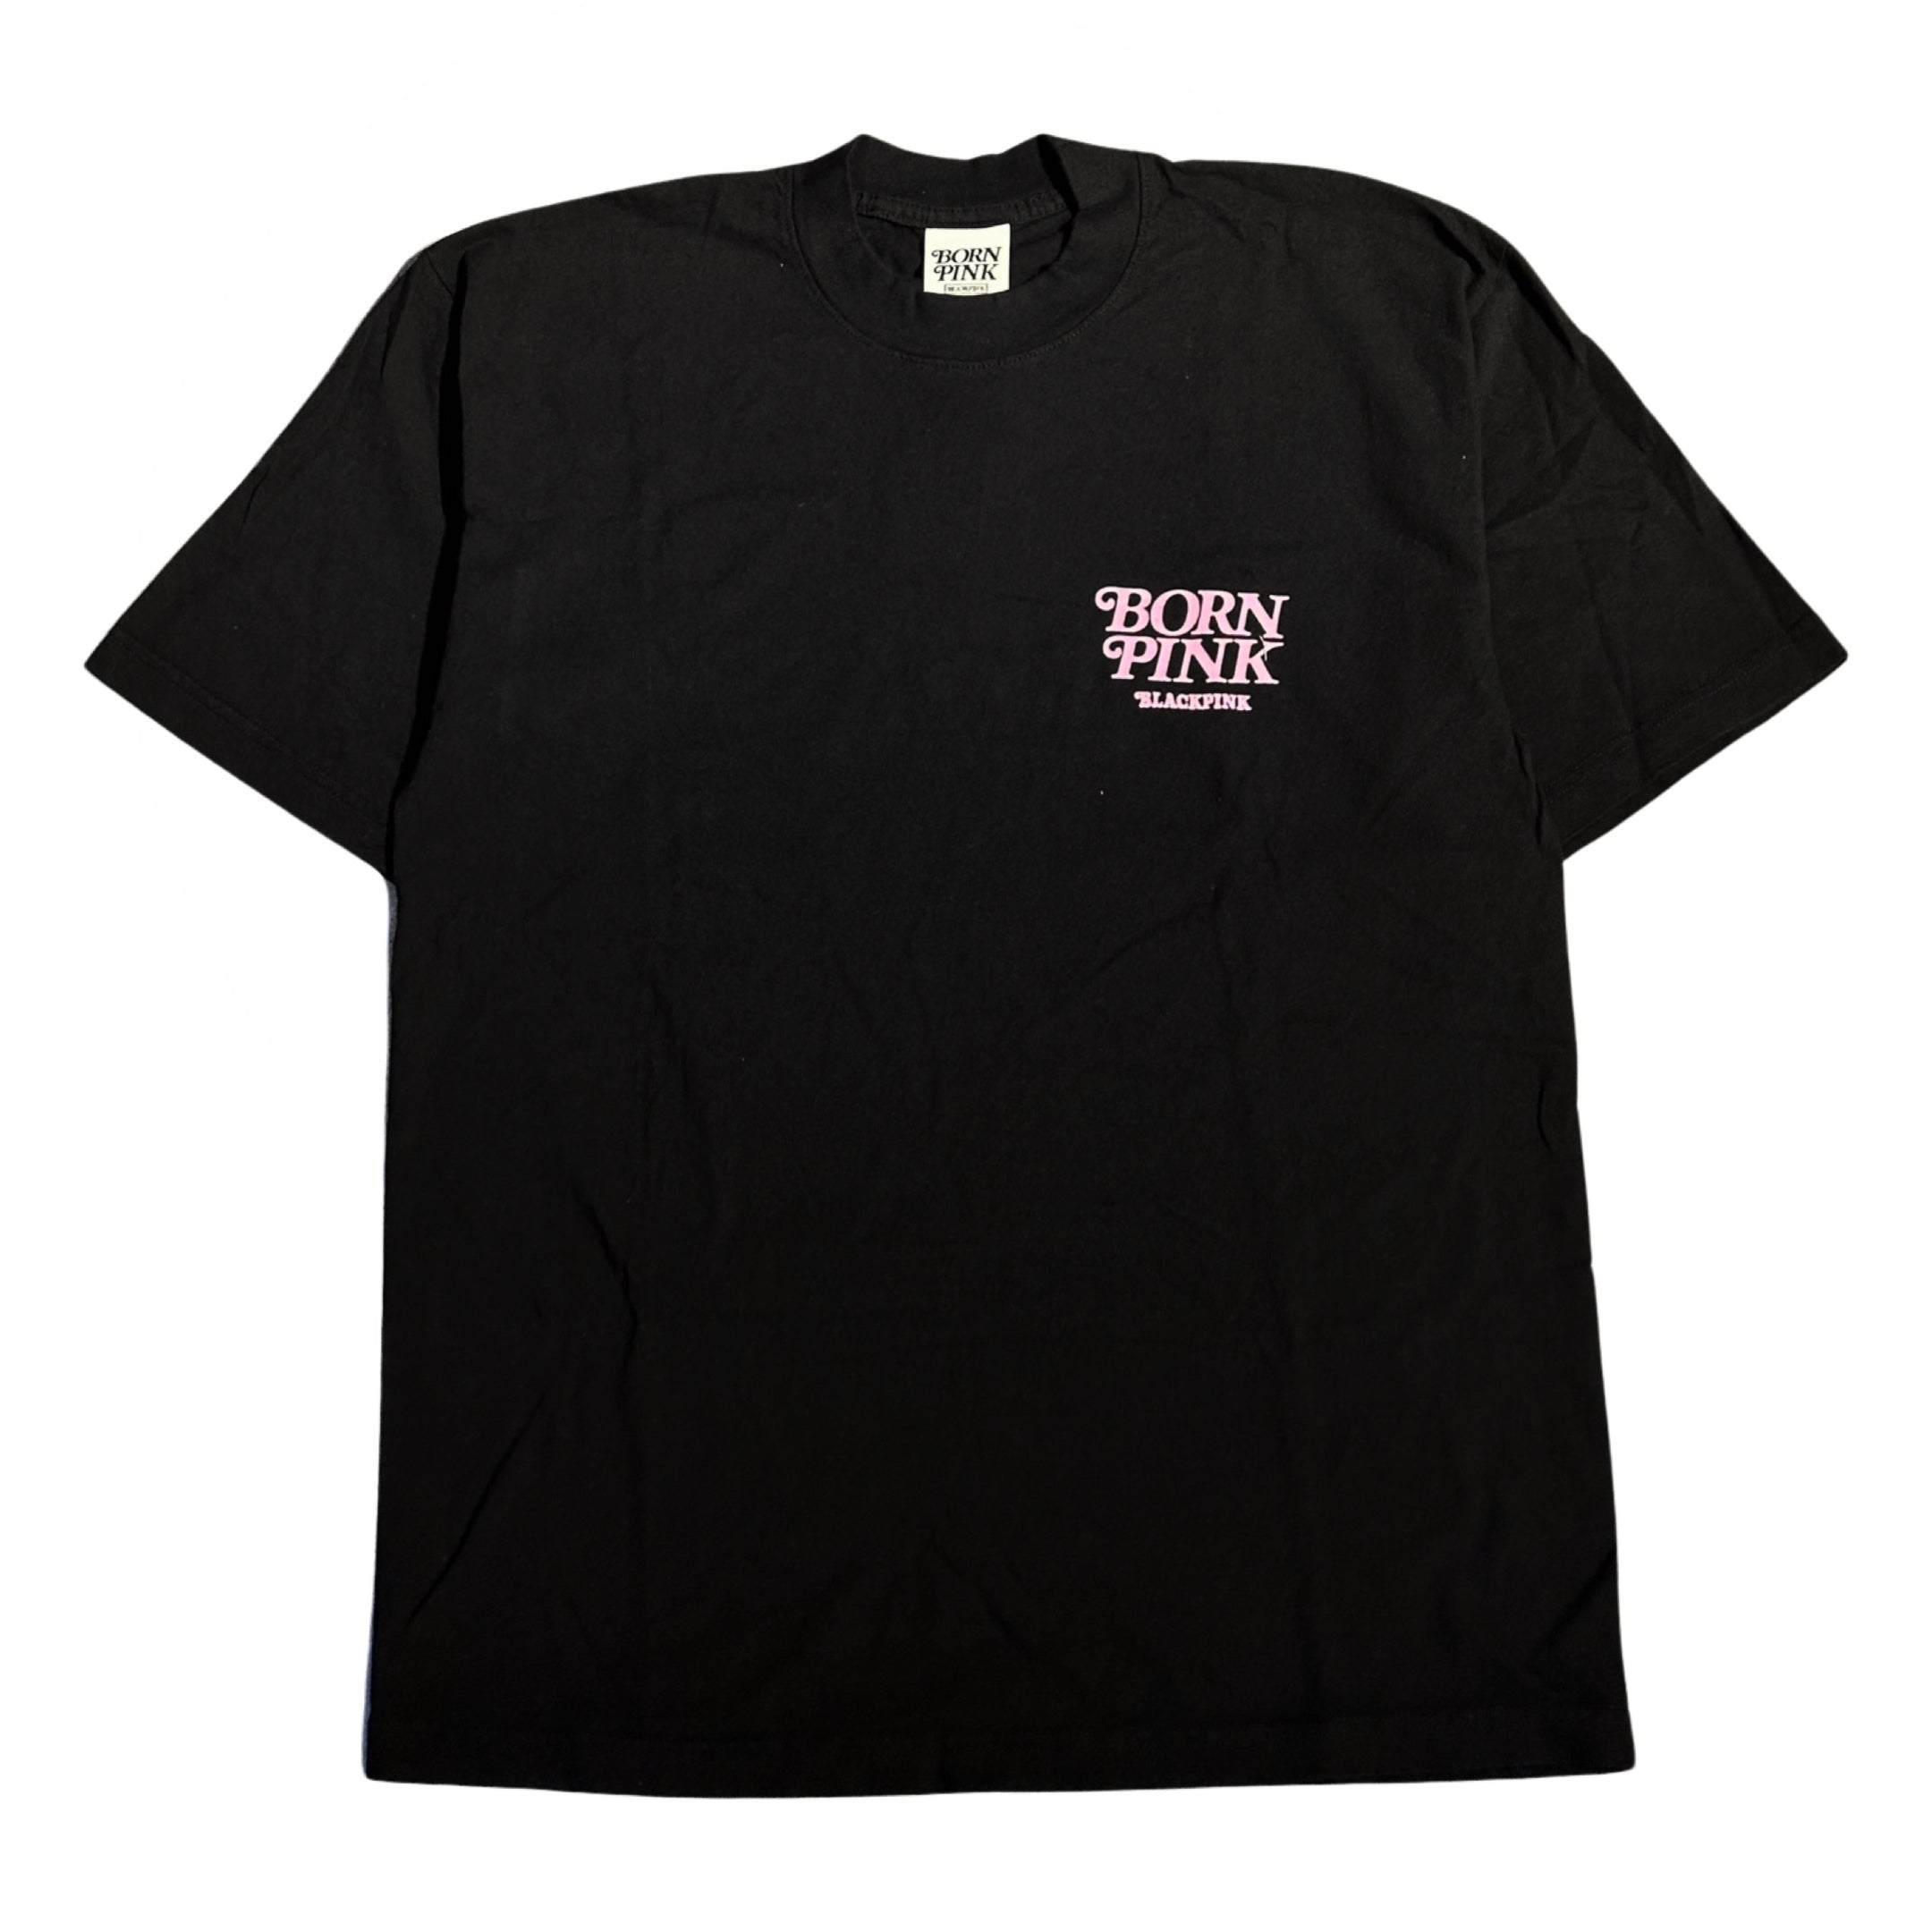 Blackpink Born pink X Verdy T-shirt Black